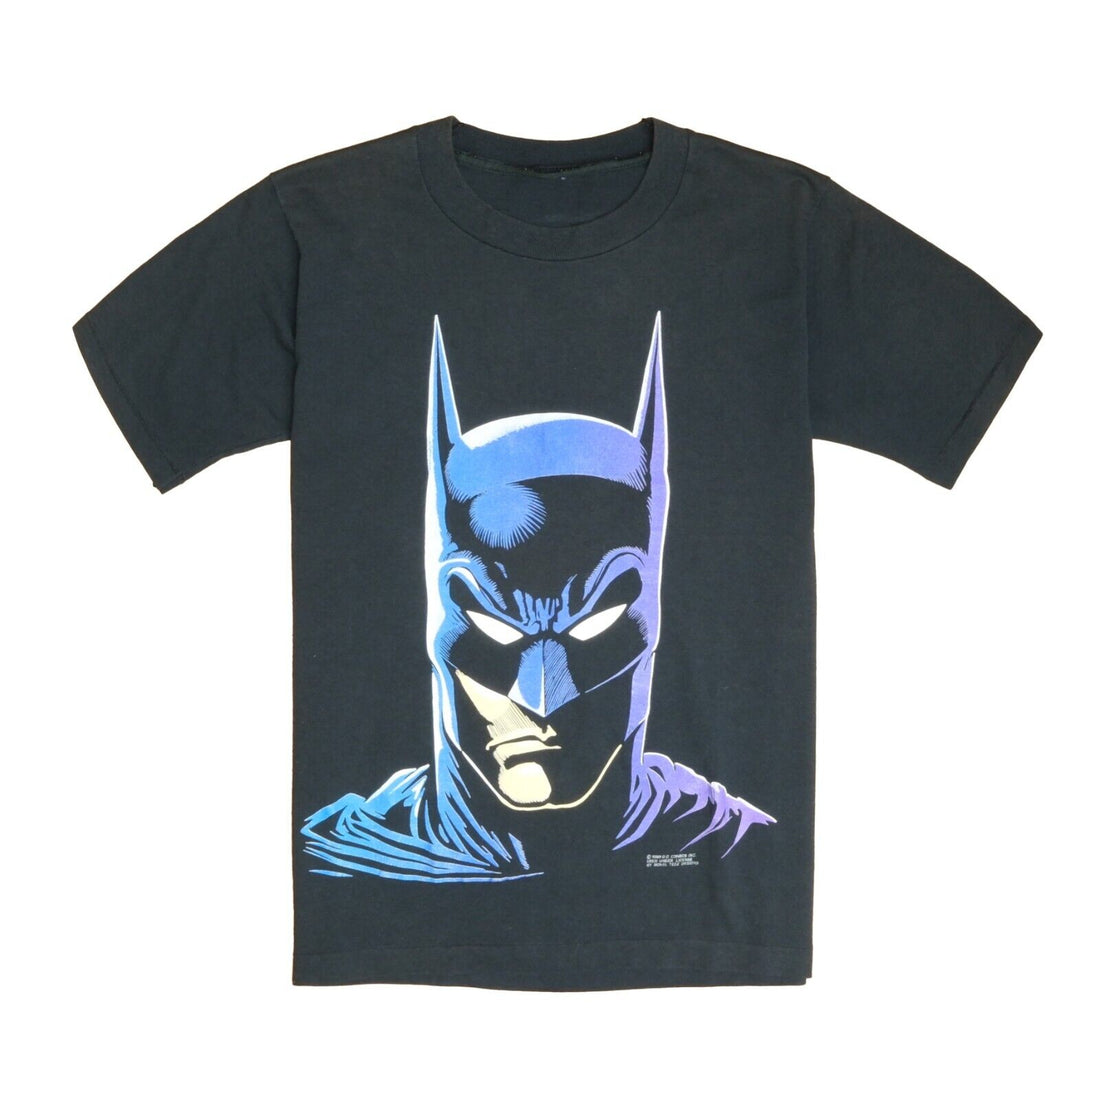 Vintage Batman DC Comics T-Shirt Size Small Black 1989 80s